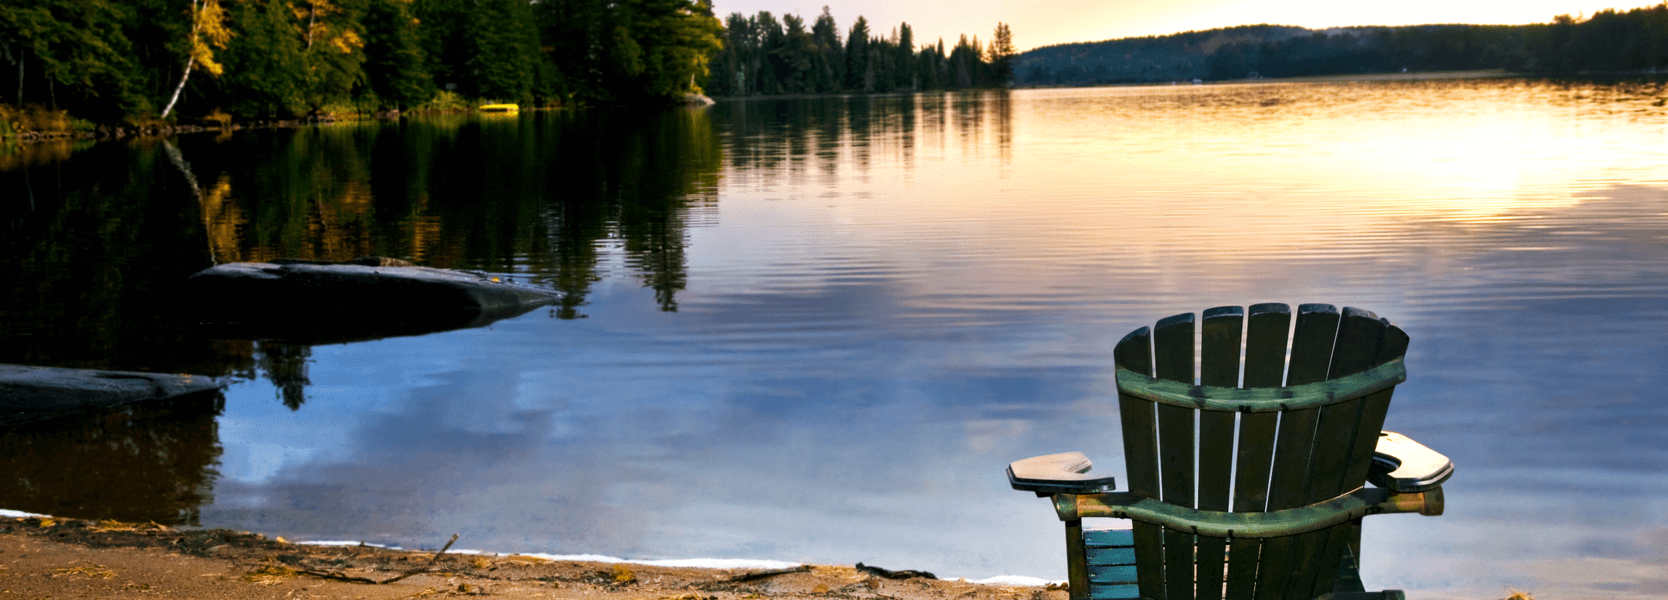 An empty Adirondack chair overlooking a serene lake in Muskoka, Ontario.